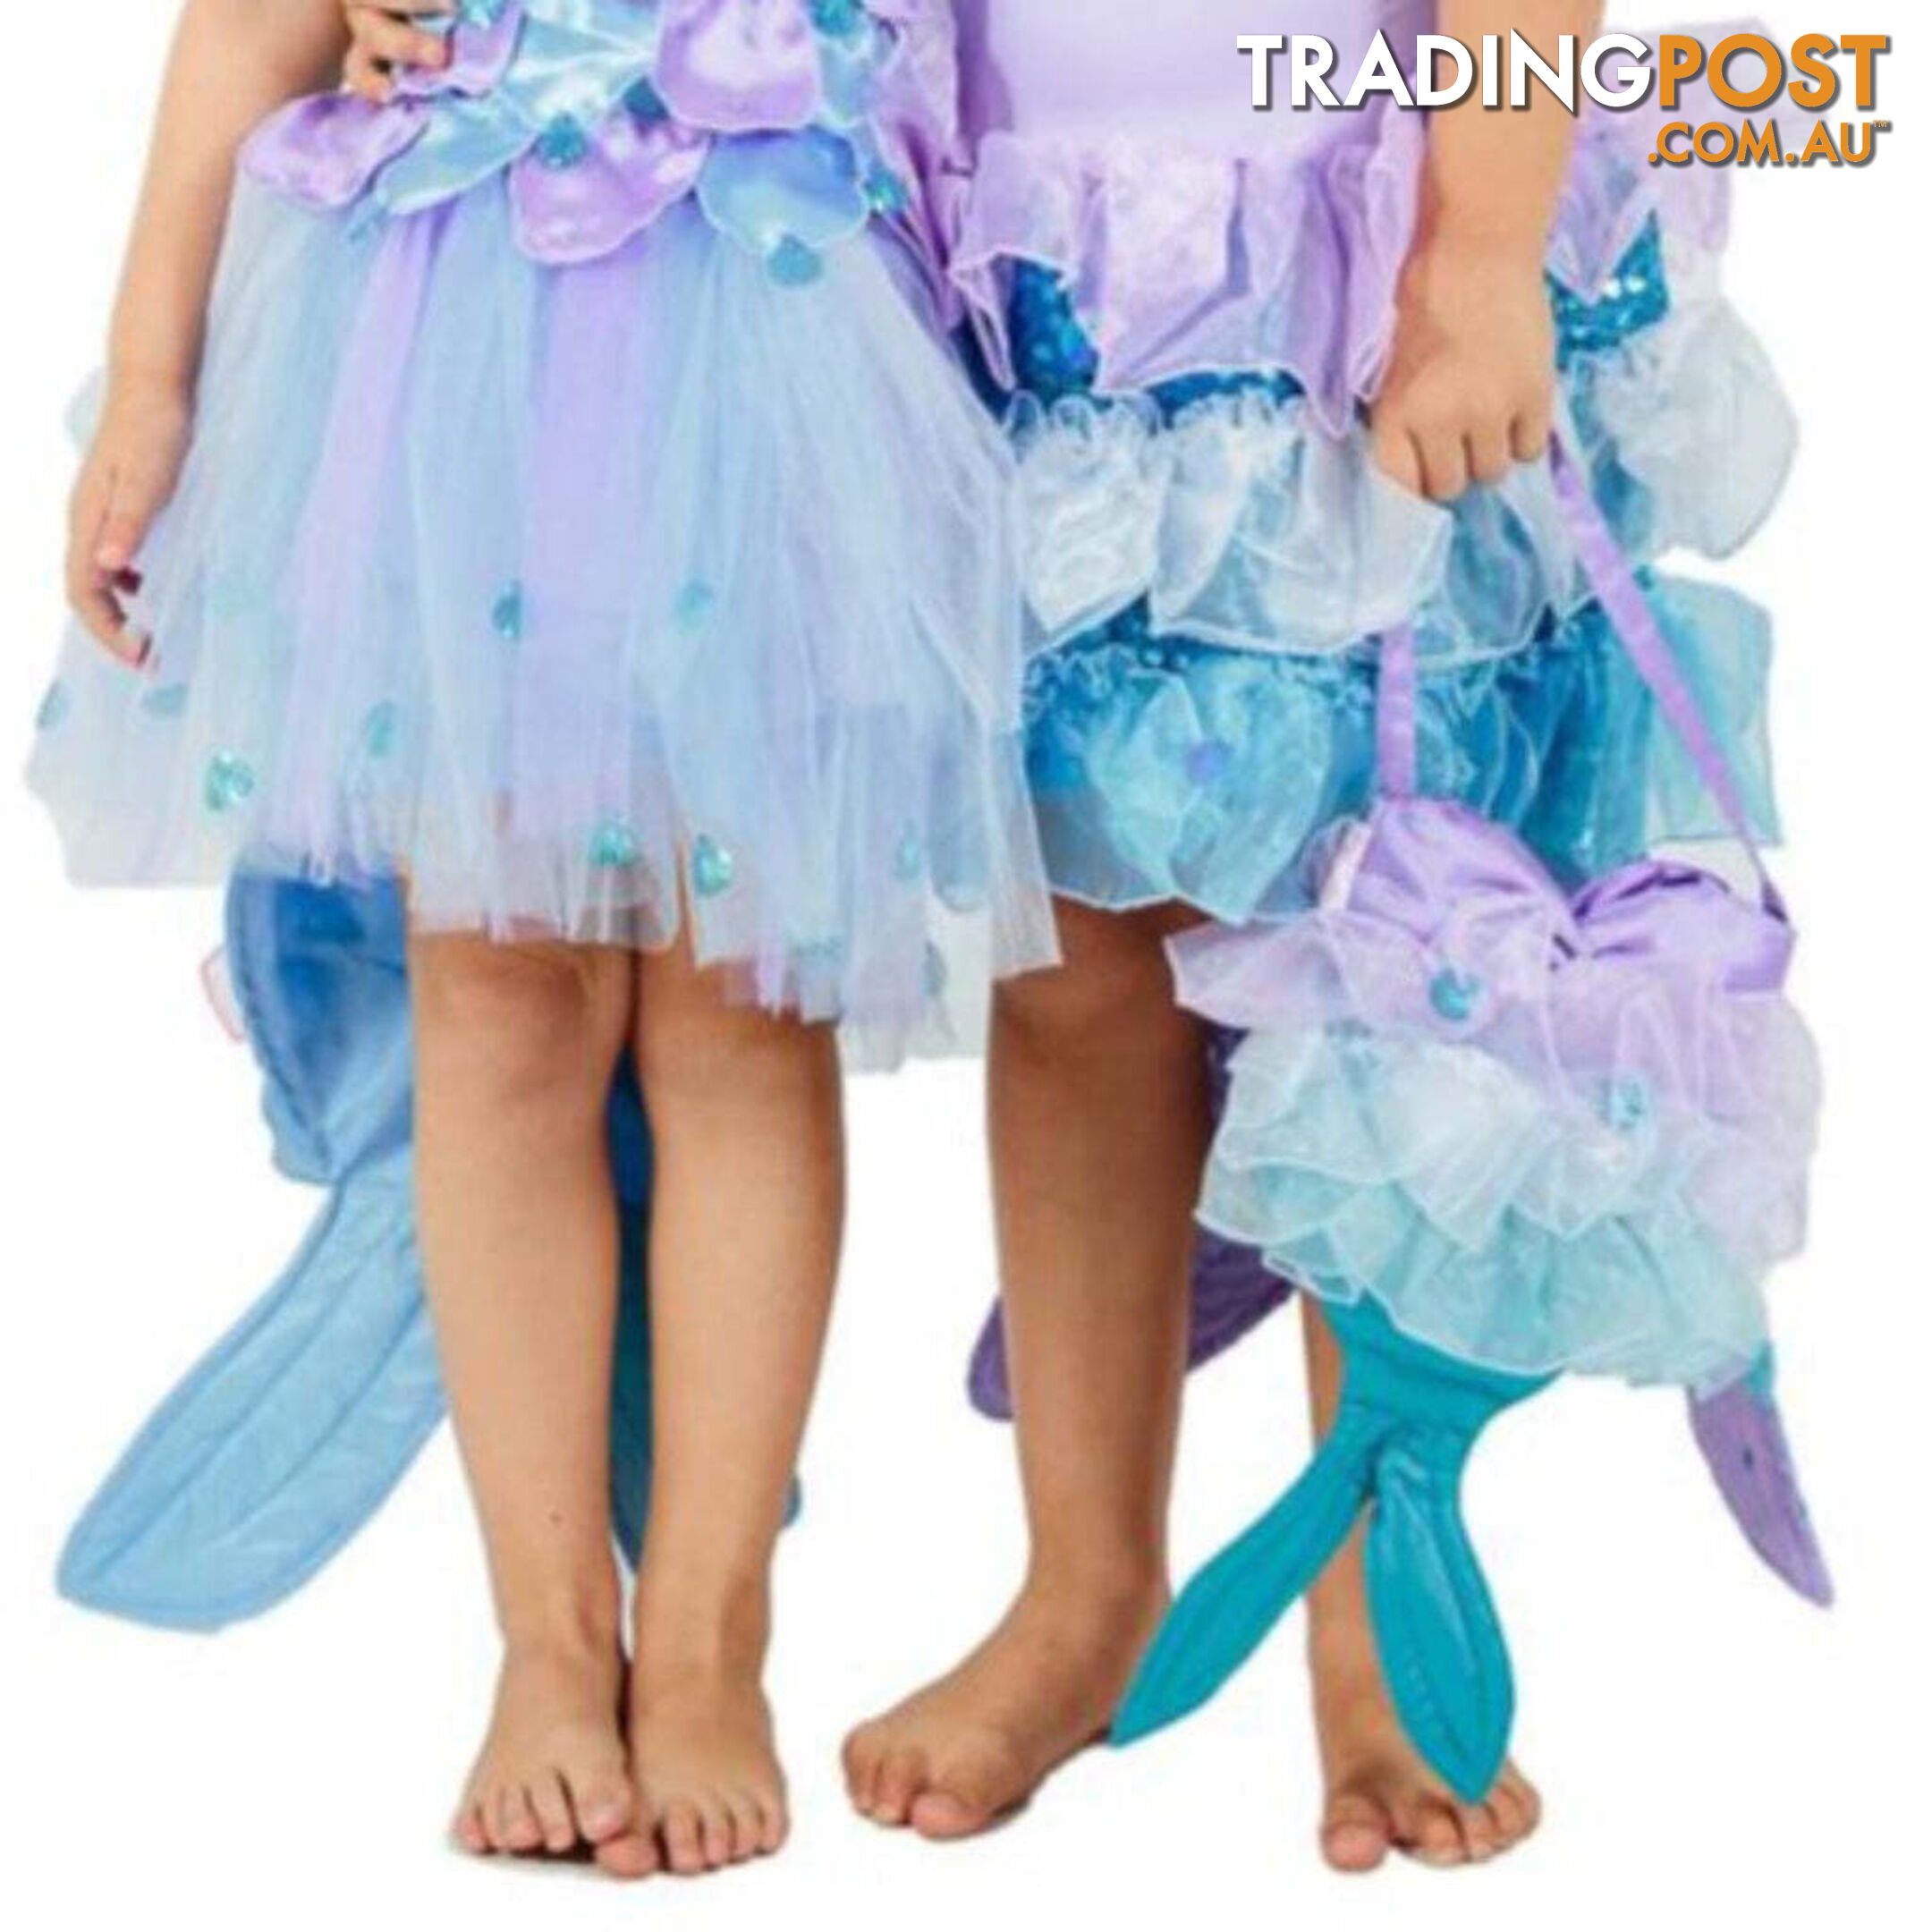 Fairy Girls - Costume Mermaid Bag - Fgf439 - 9787310004393